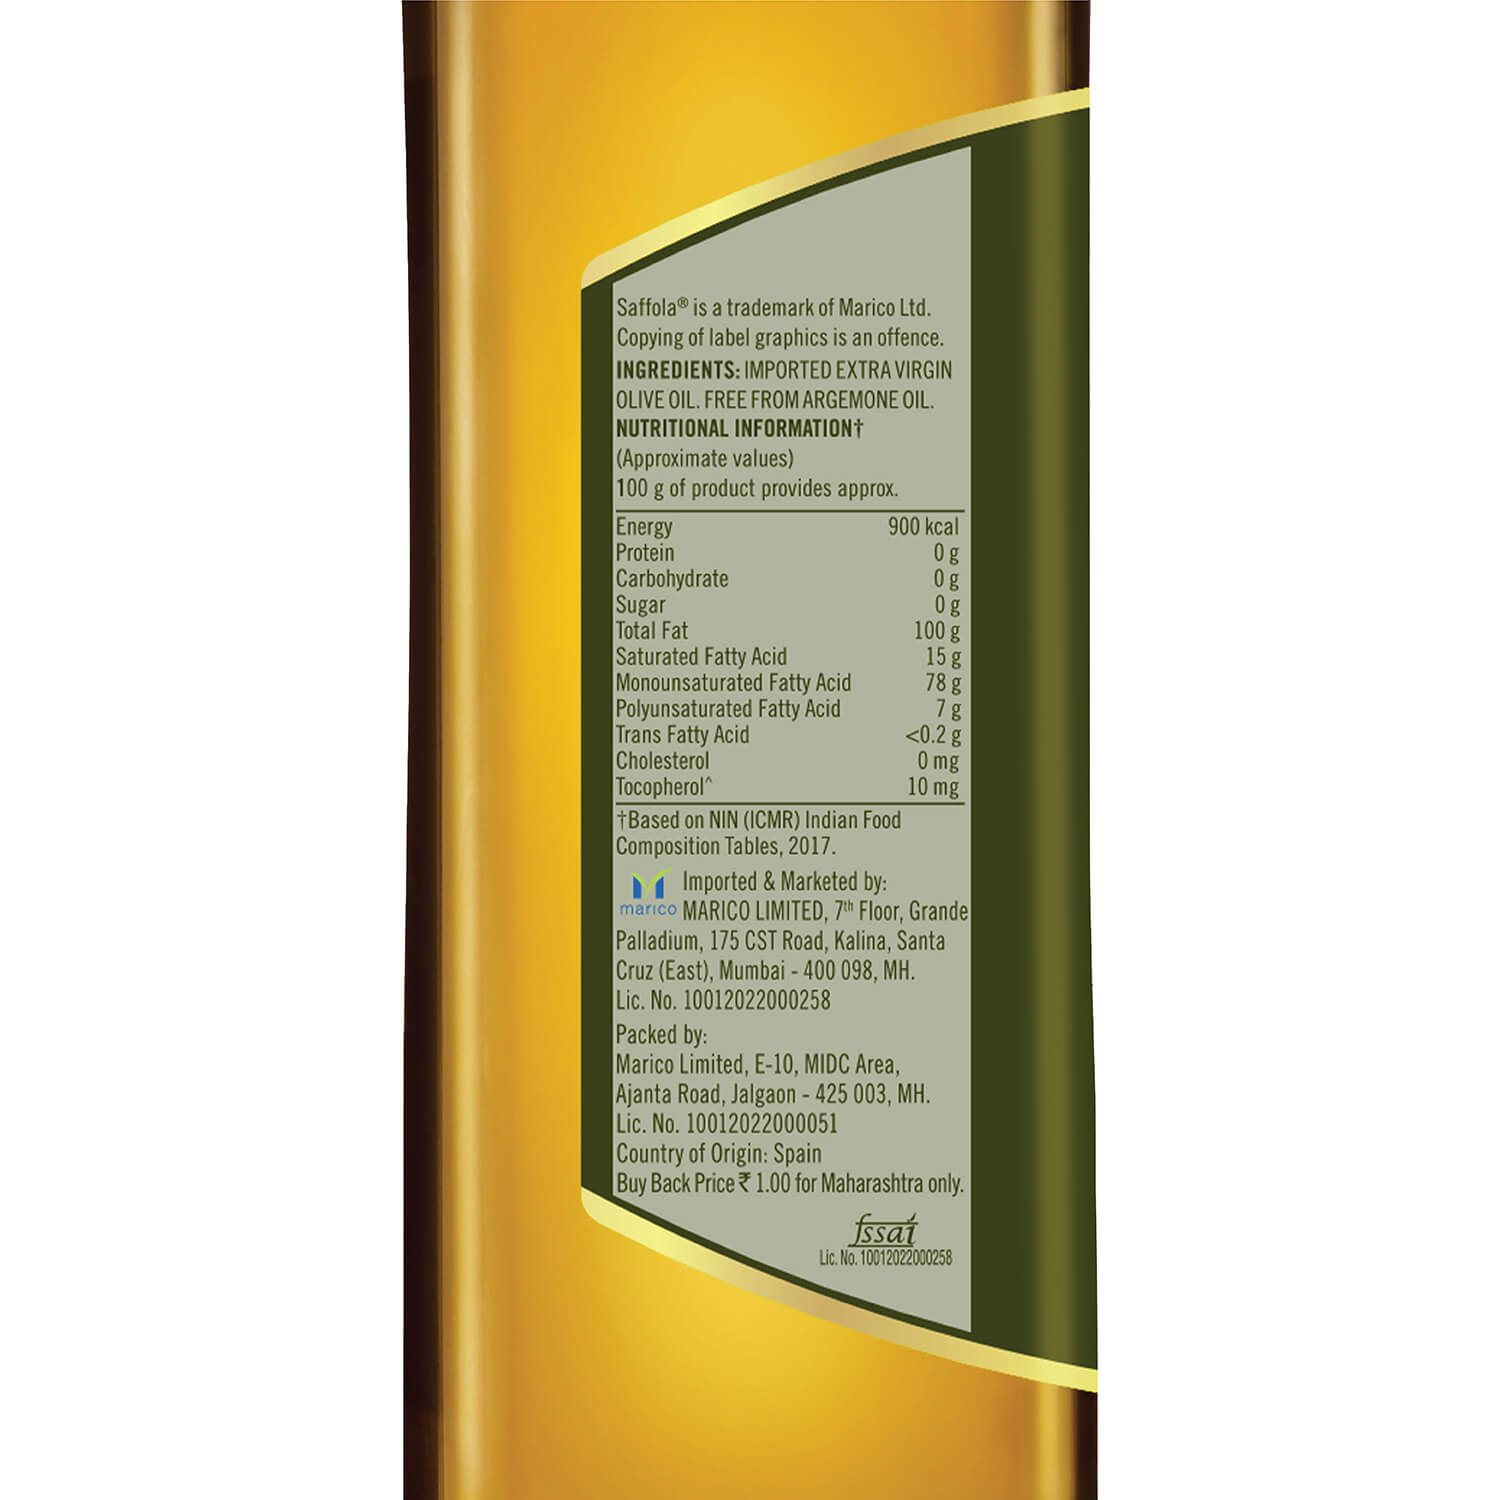 Saffola Aura Extra Virgin Olive Oil 1L Pack of 2